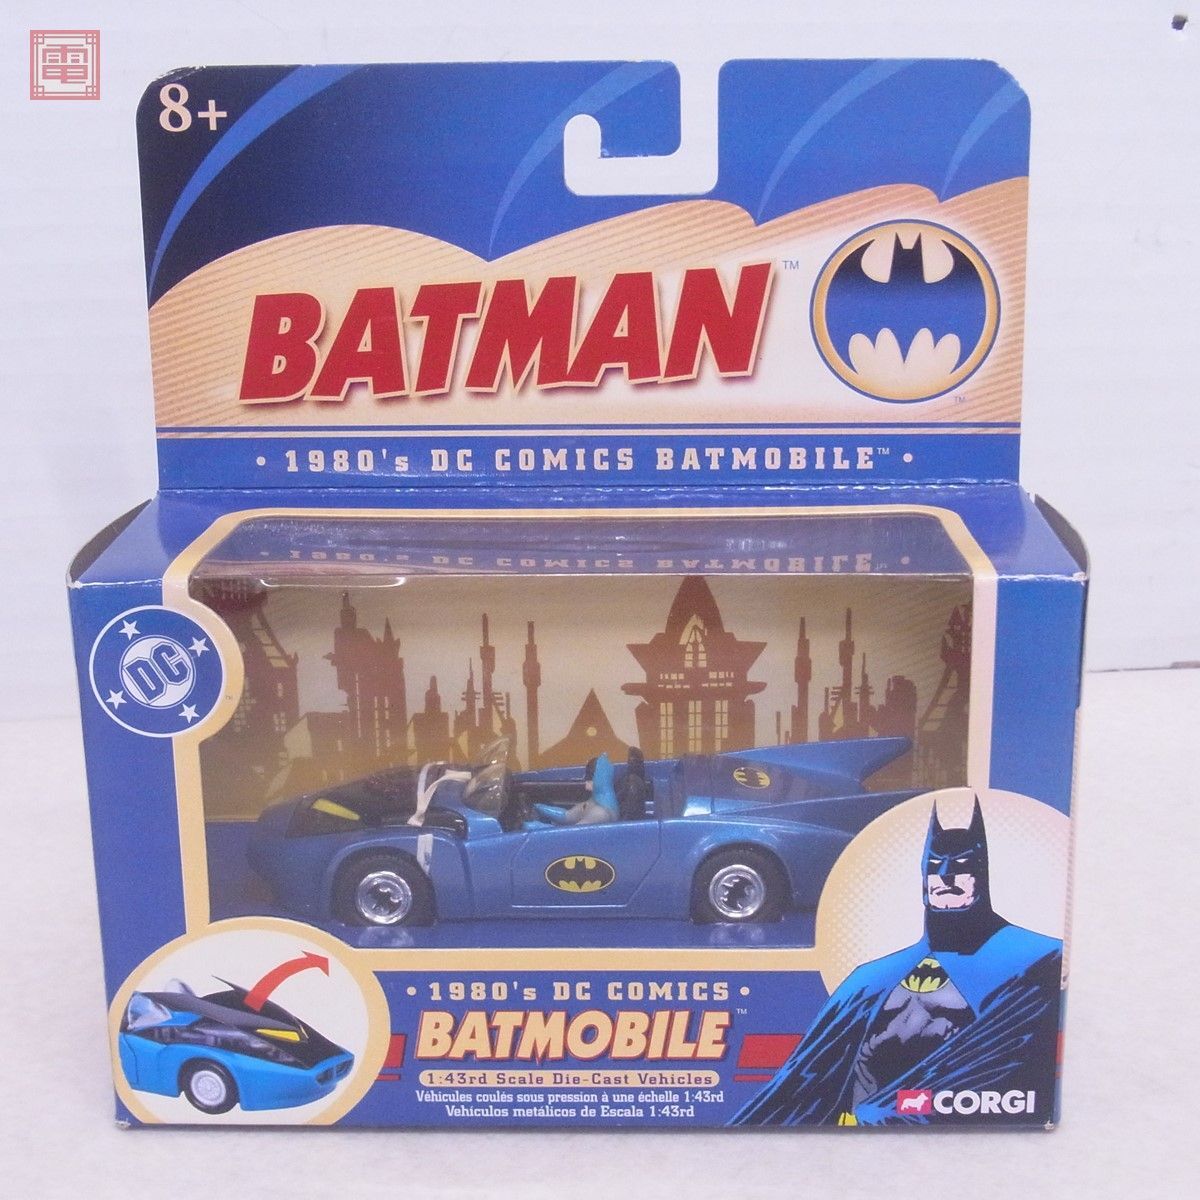  Corgi 1/43 Batman bat Mobil / Joker Mobil / bat marine other together 9 point set CORGI BATMAN[20